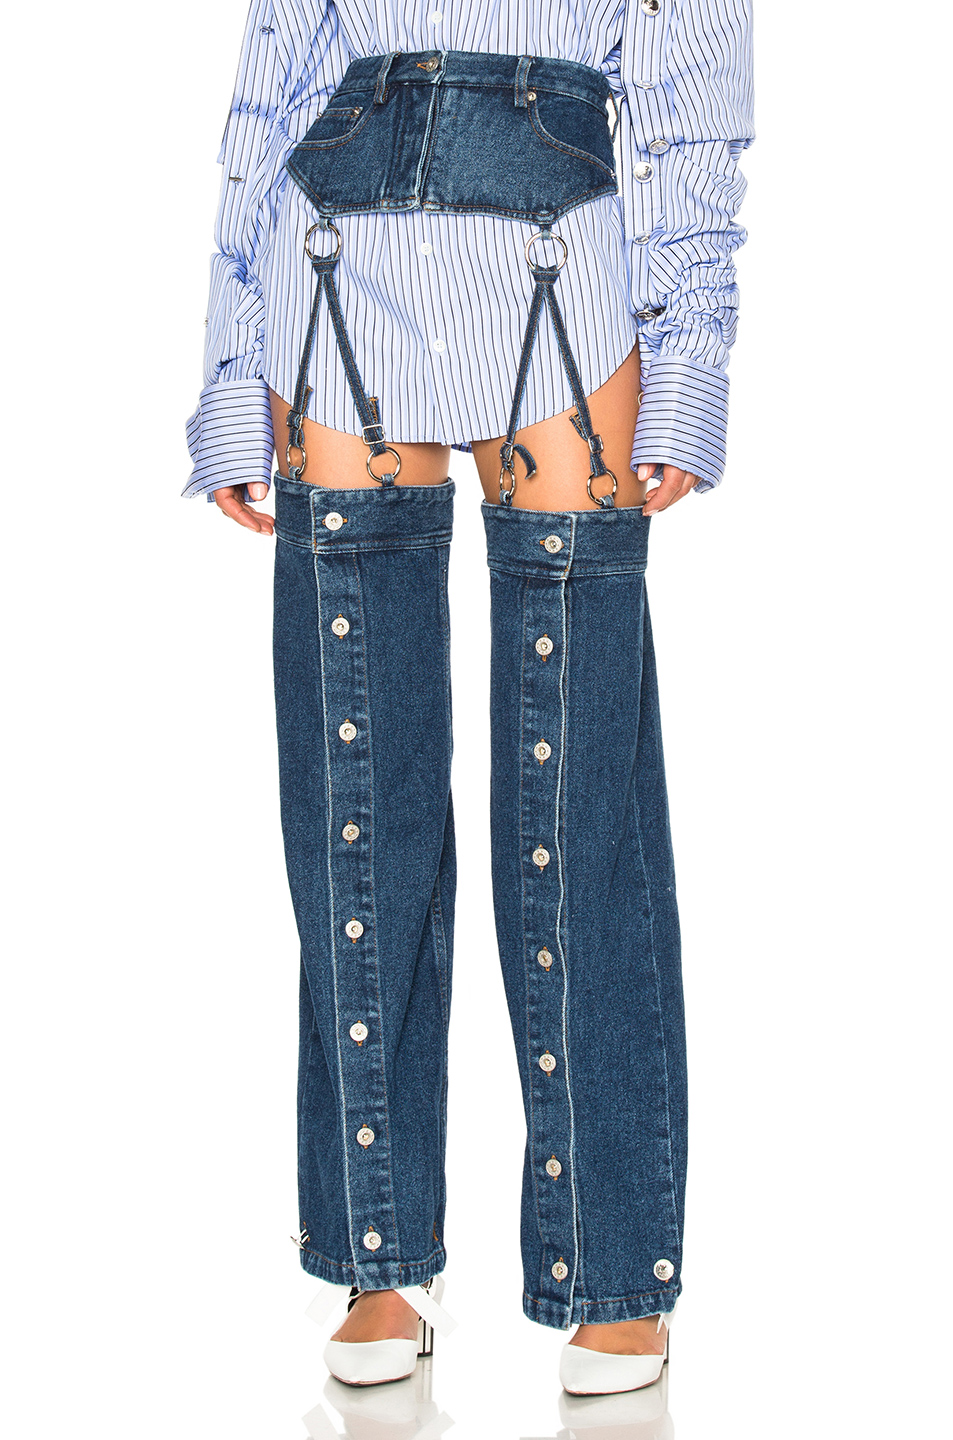 Pants that shouldn't be #pants #fashion #stupidrichpeoplefashion #funny  #wtf #model